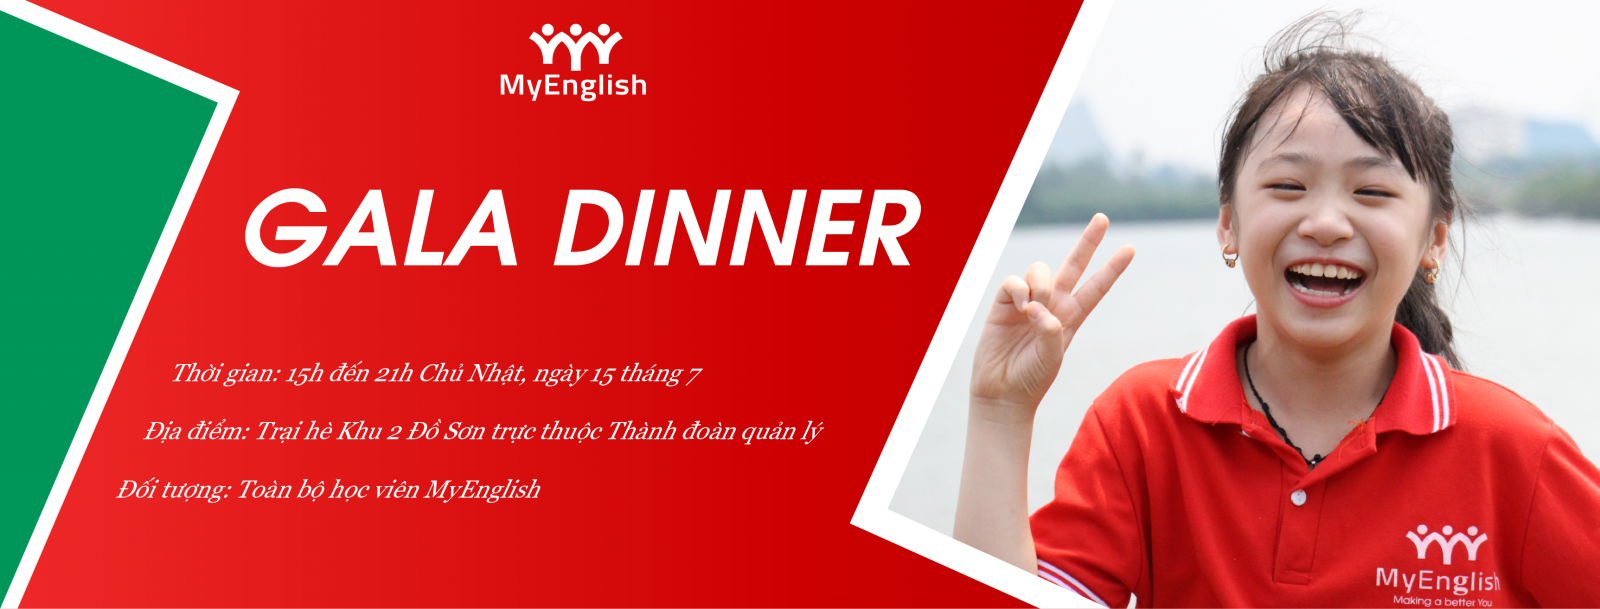 Gala Dinner MyEnglish